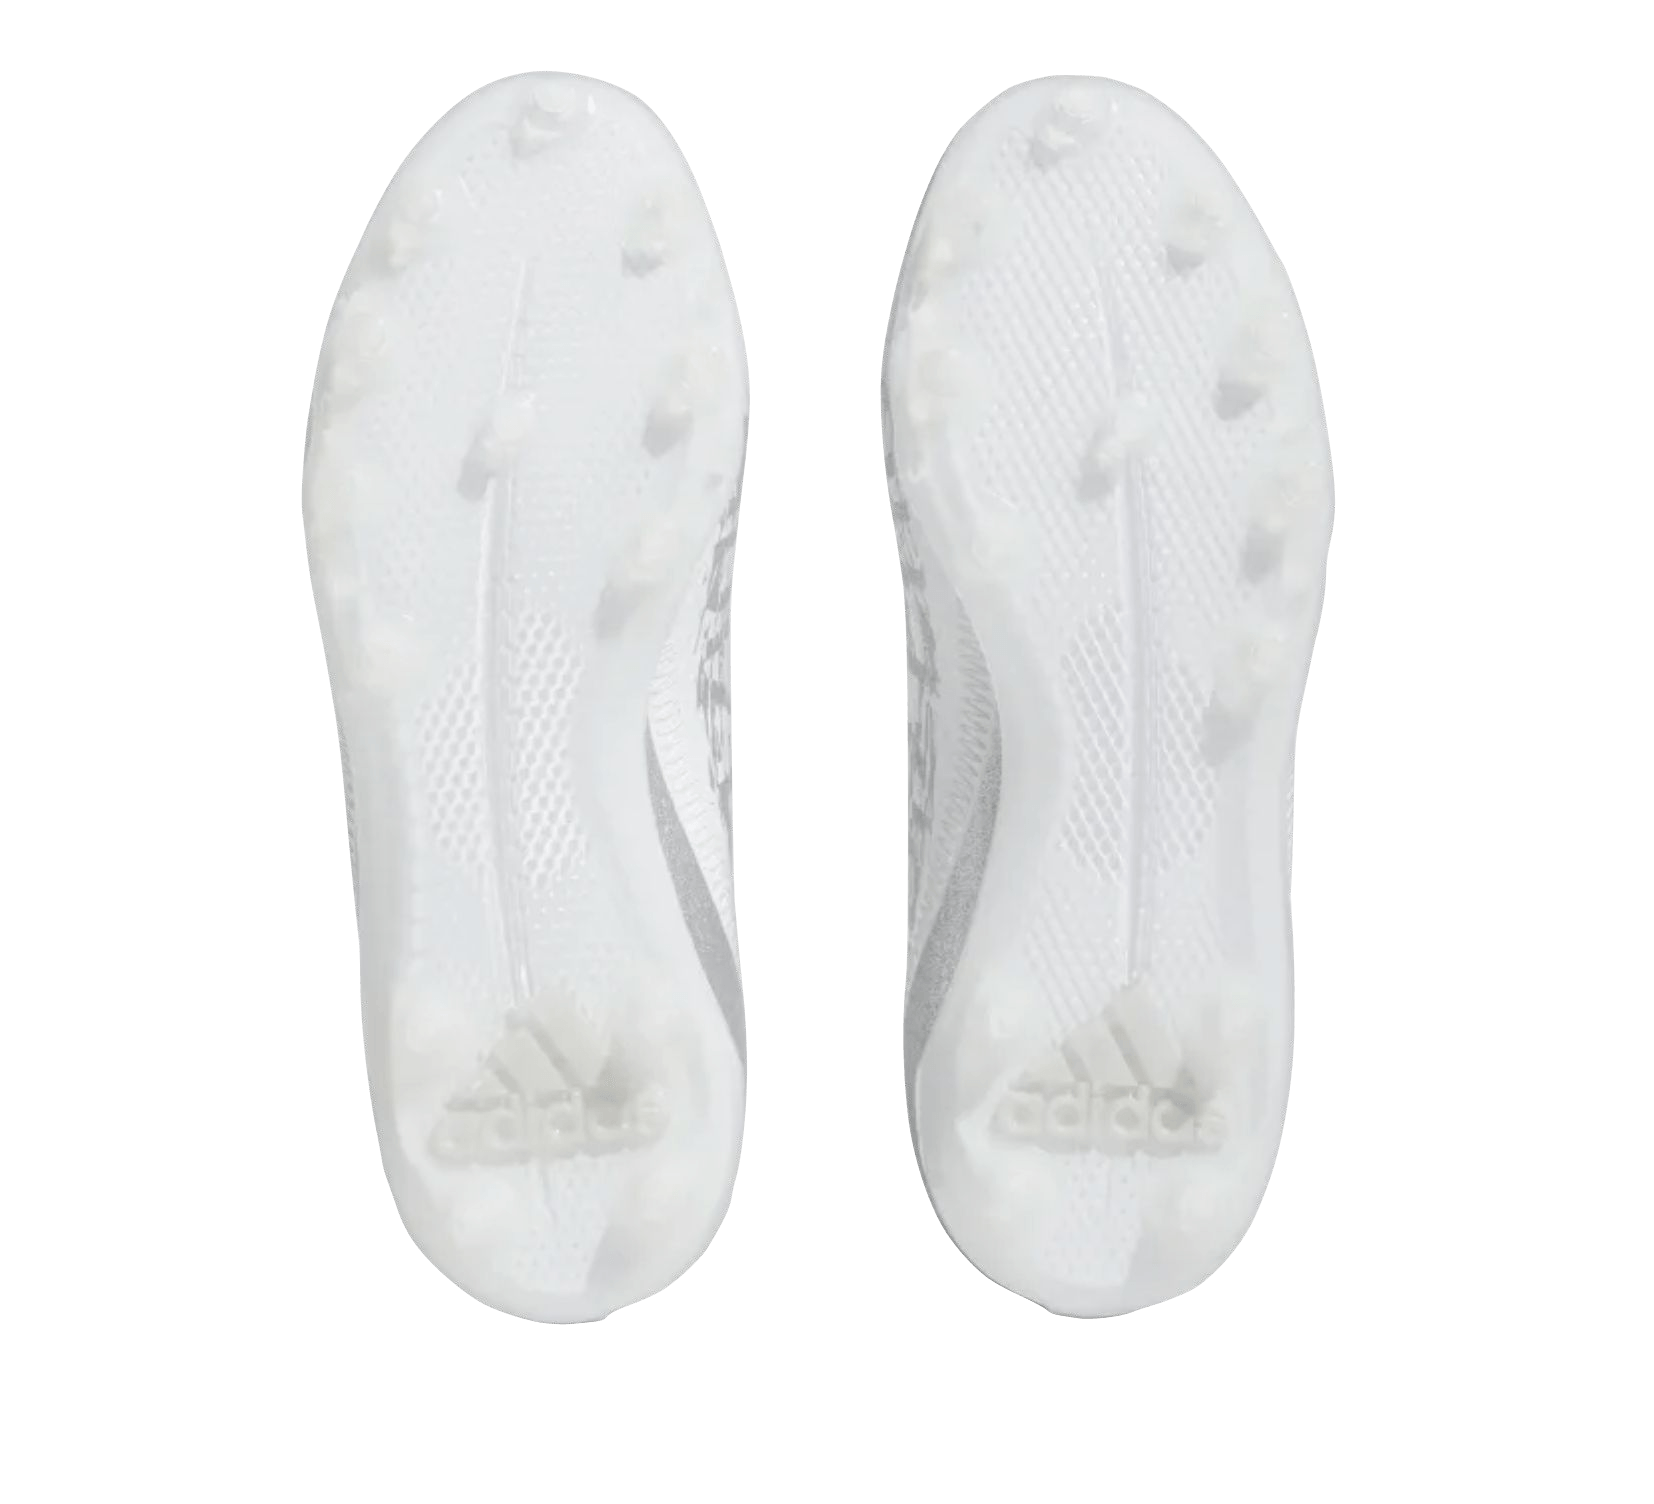 Zapato Cleats Adidas Adizero Inline Blanco Infantil